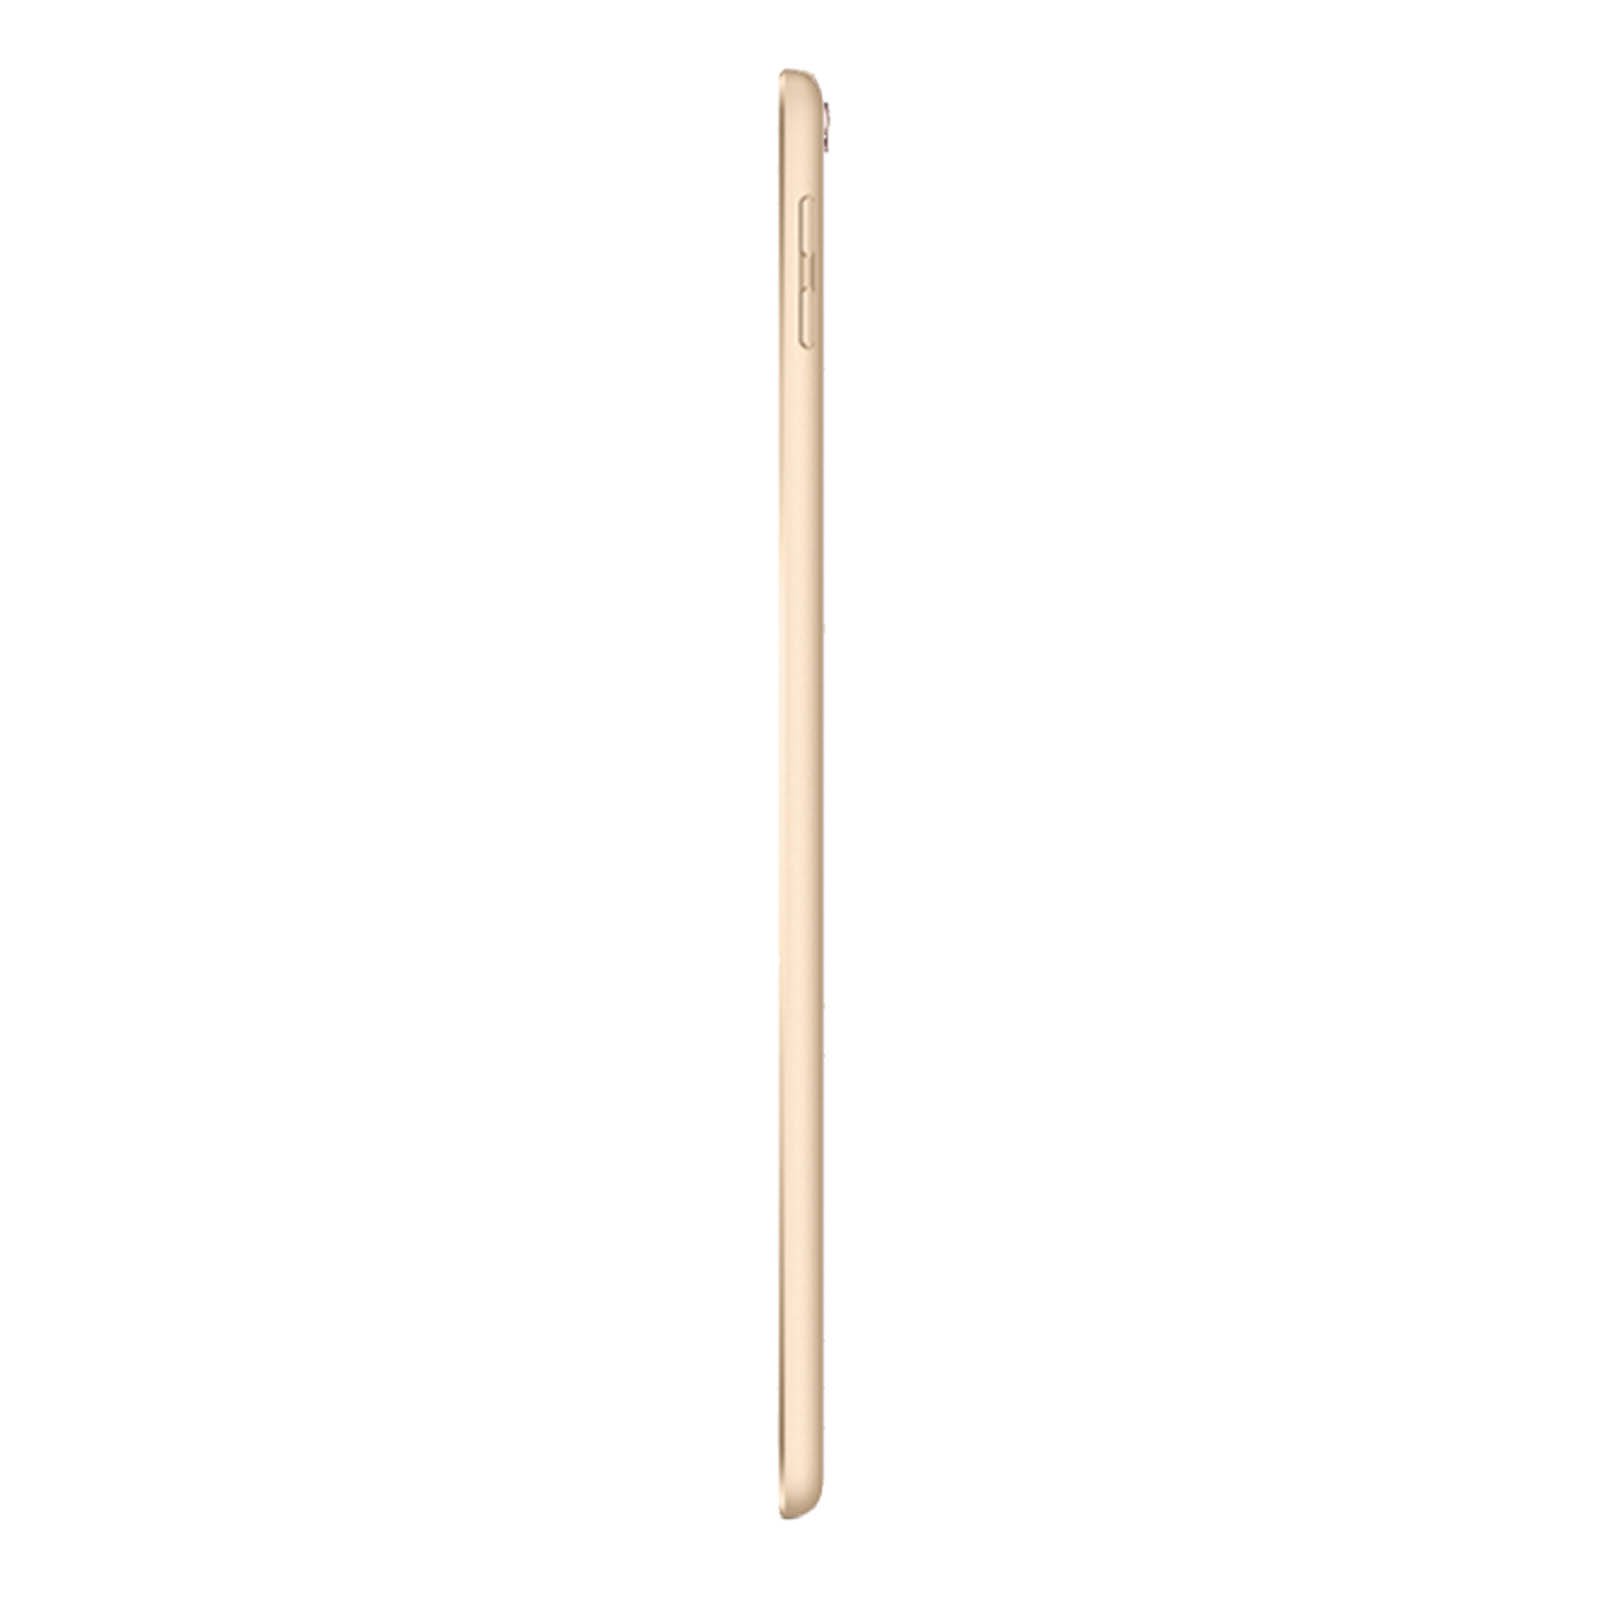 iPad Pro 10.5 Inch 64GB Gold Very Good - Unlocked